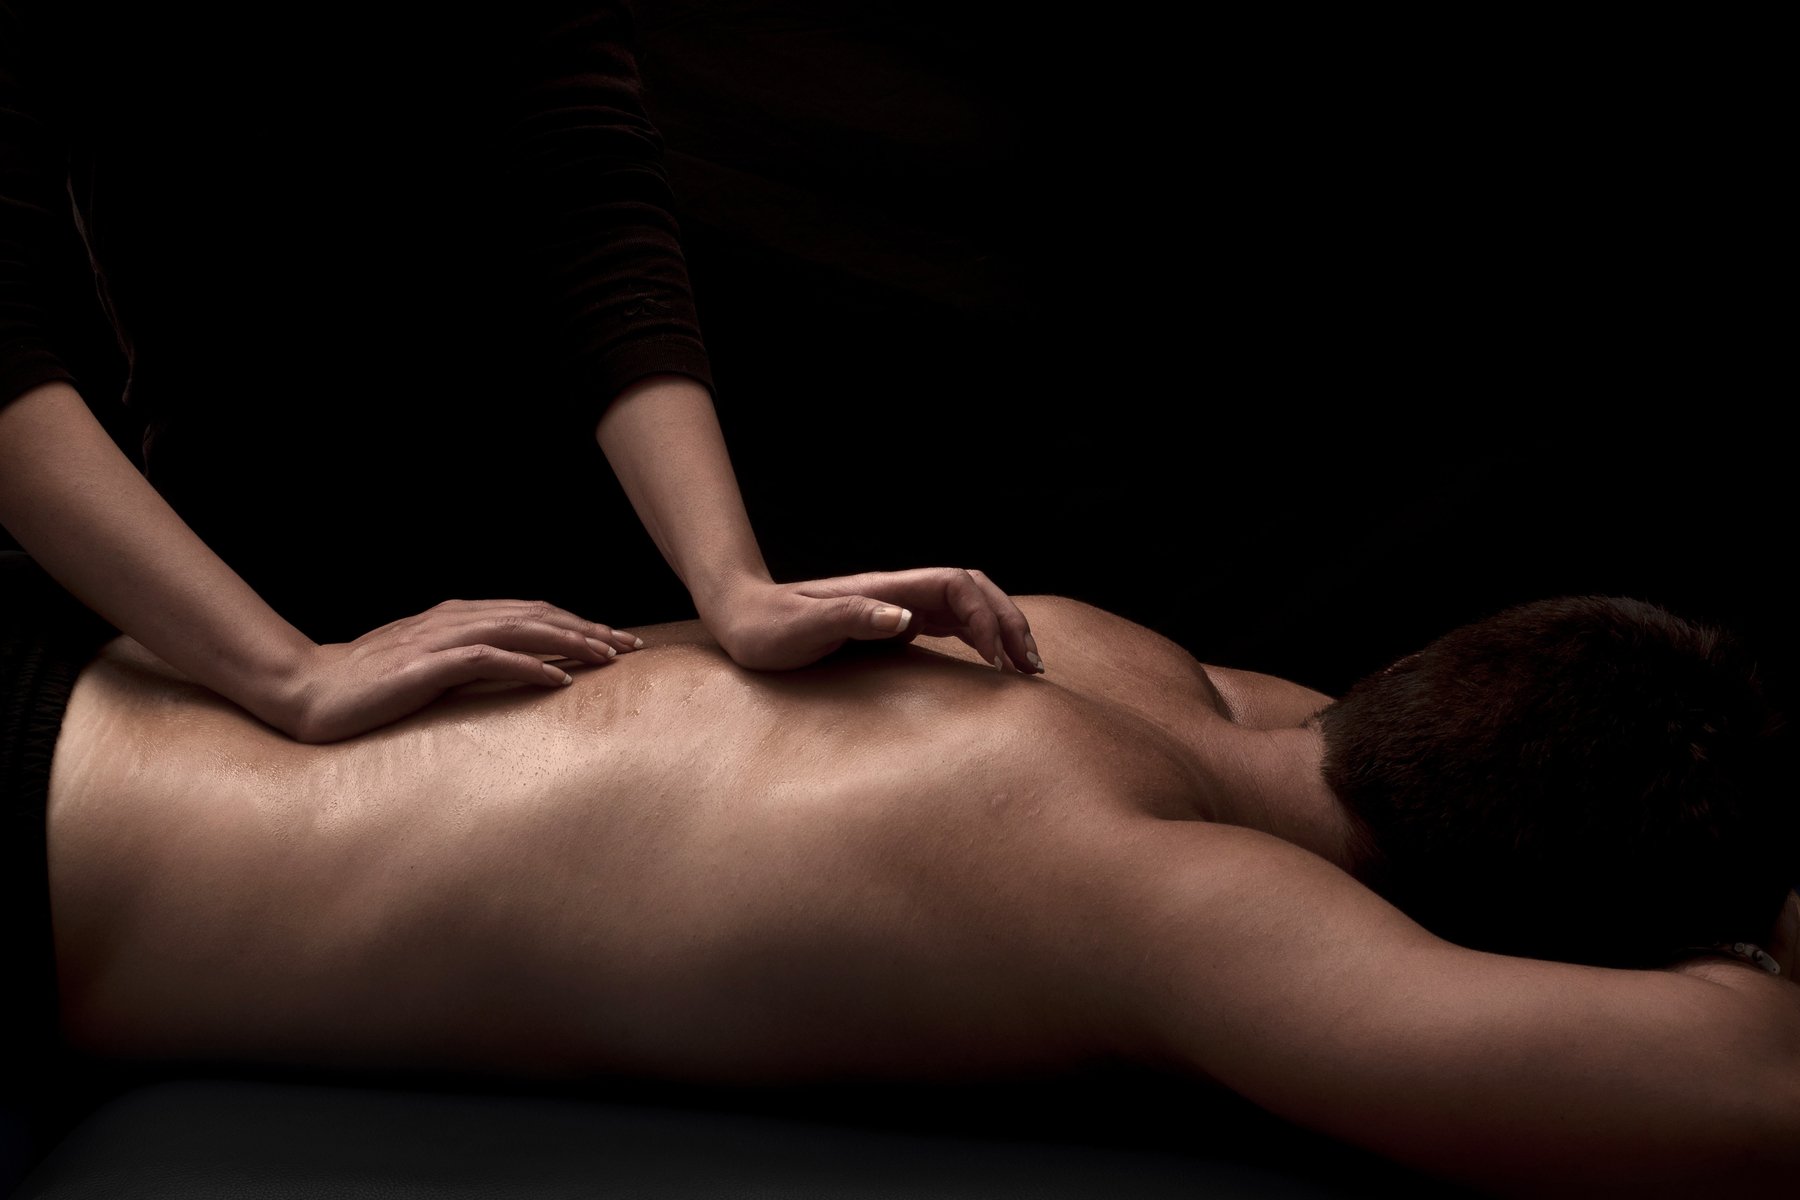 Erotic massage Nazilli, Where find parlors nude massage in Turkey